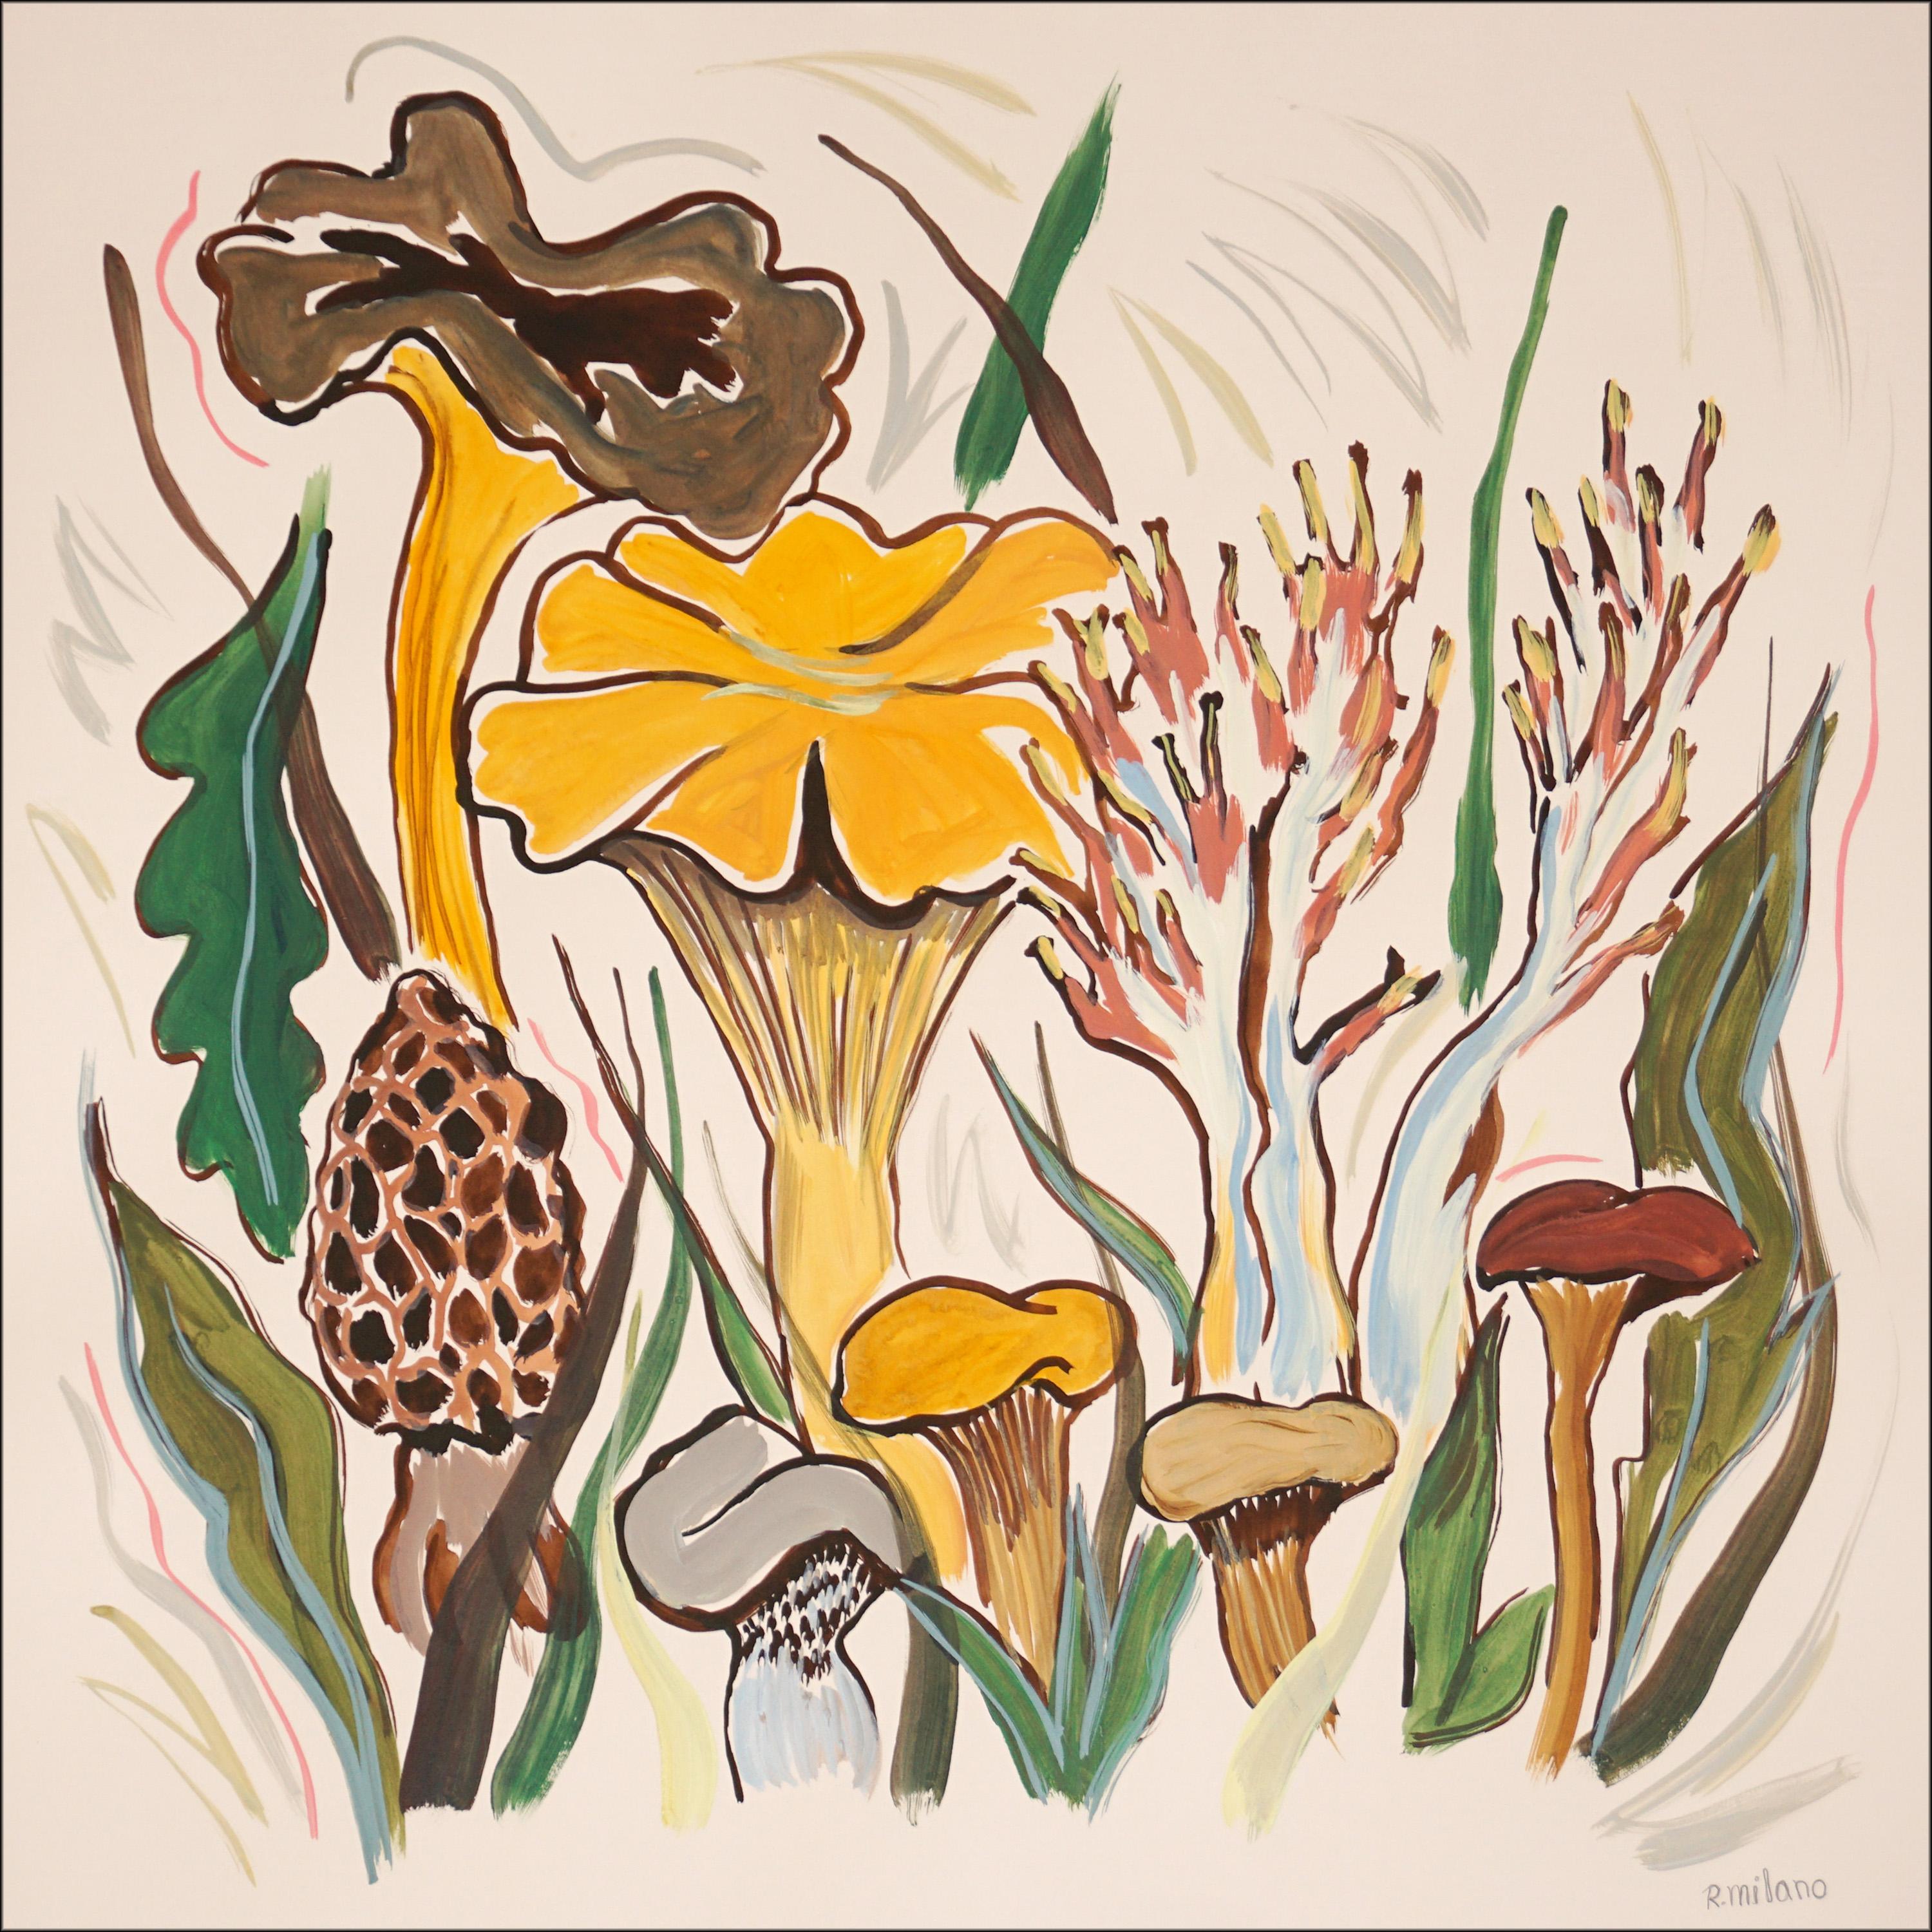 Romina Milano Still-Life Painting - Wild Mushrooms Harvest , Earth Tones Squared Landscape, Illustration Style Brown